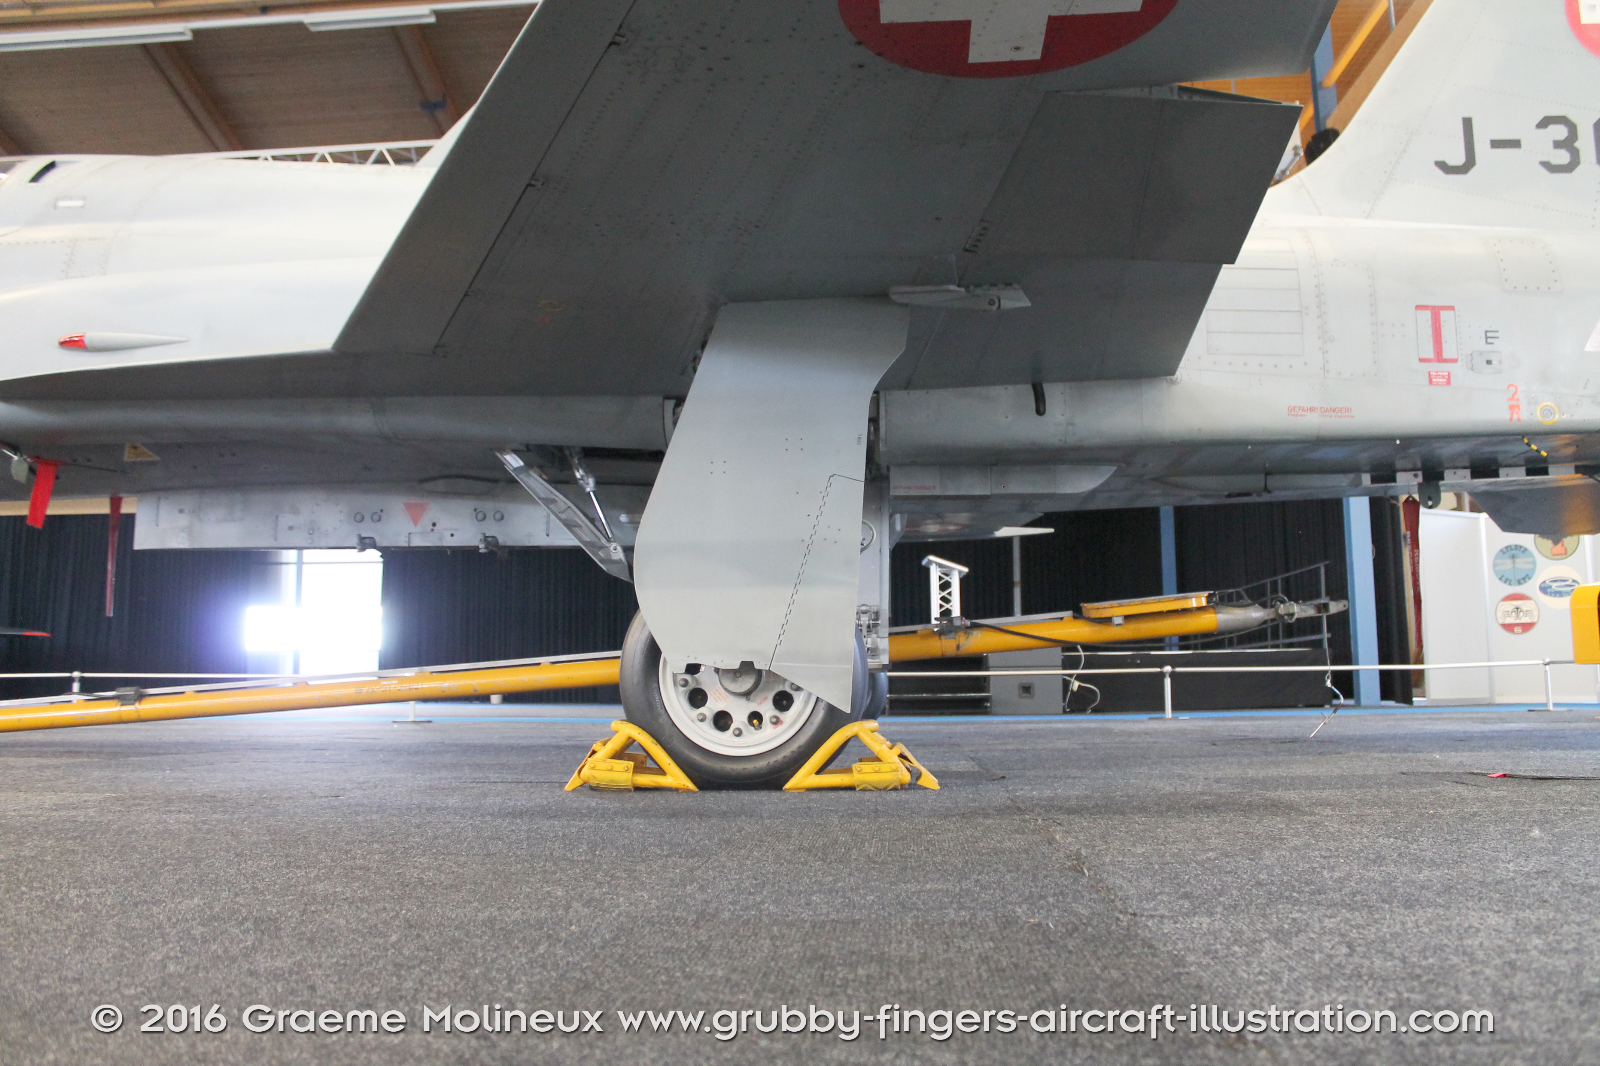 NORTHROP_F-5E_Freedom_Fighter_J-3098_Swiss_Air_Force_Museum_2015_24_GrubbyFingers